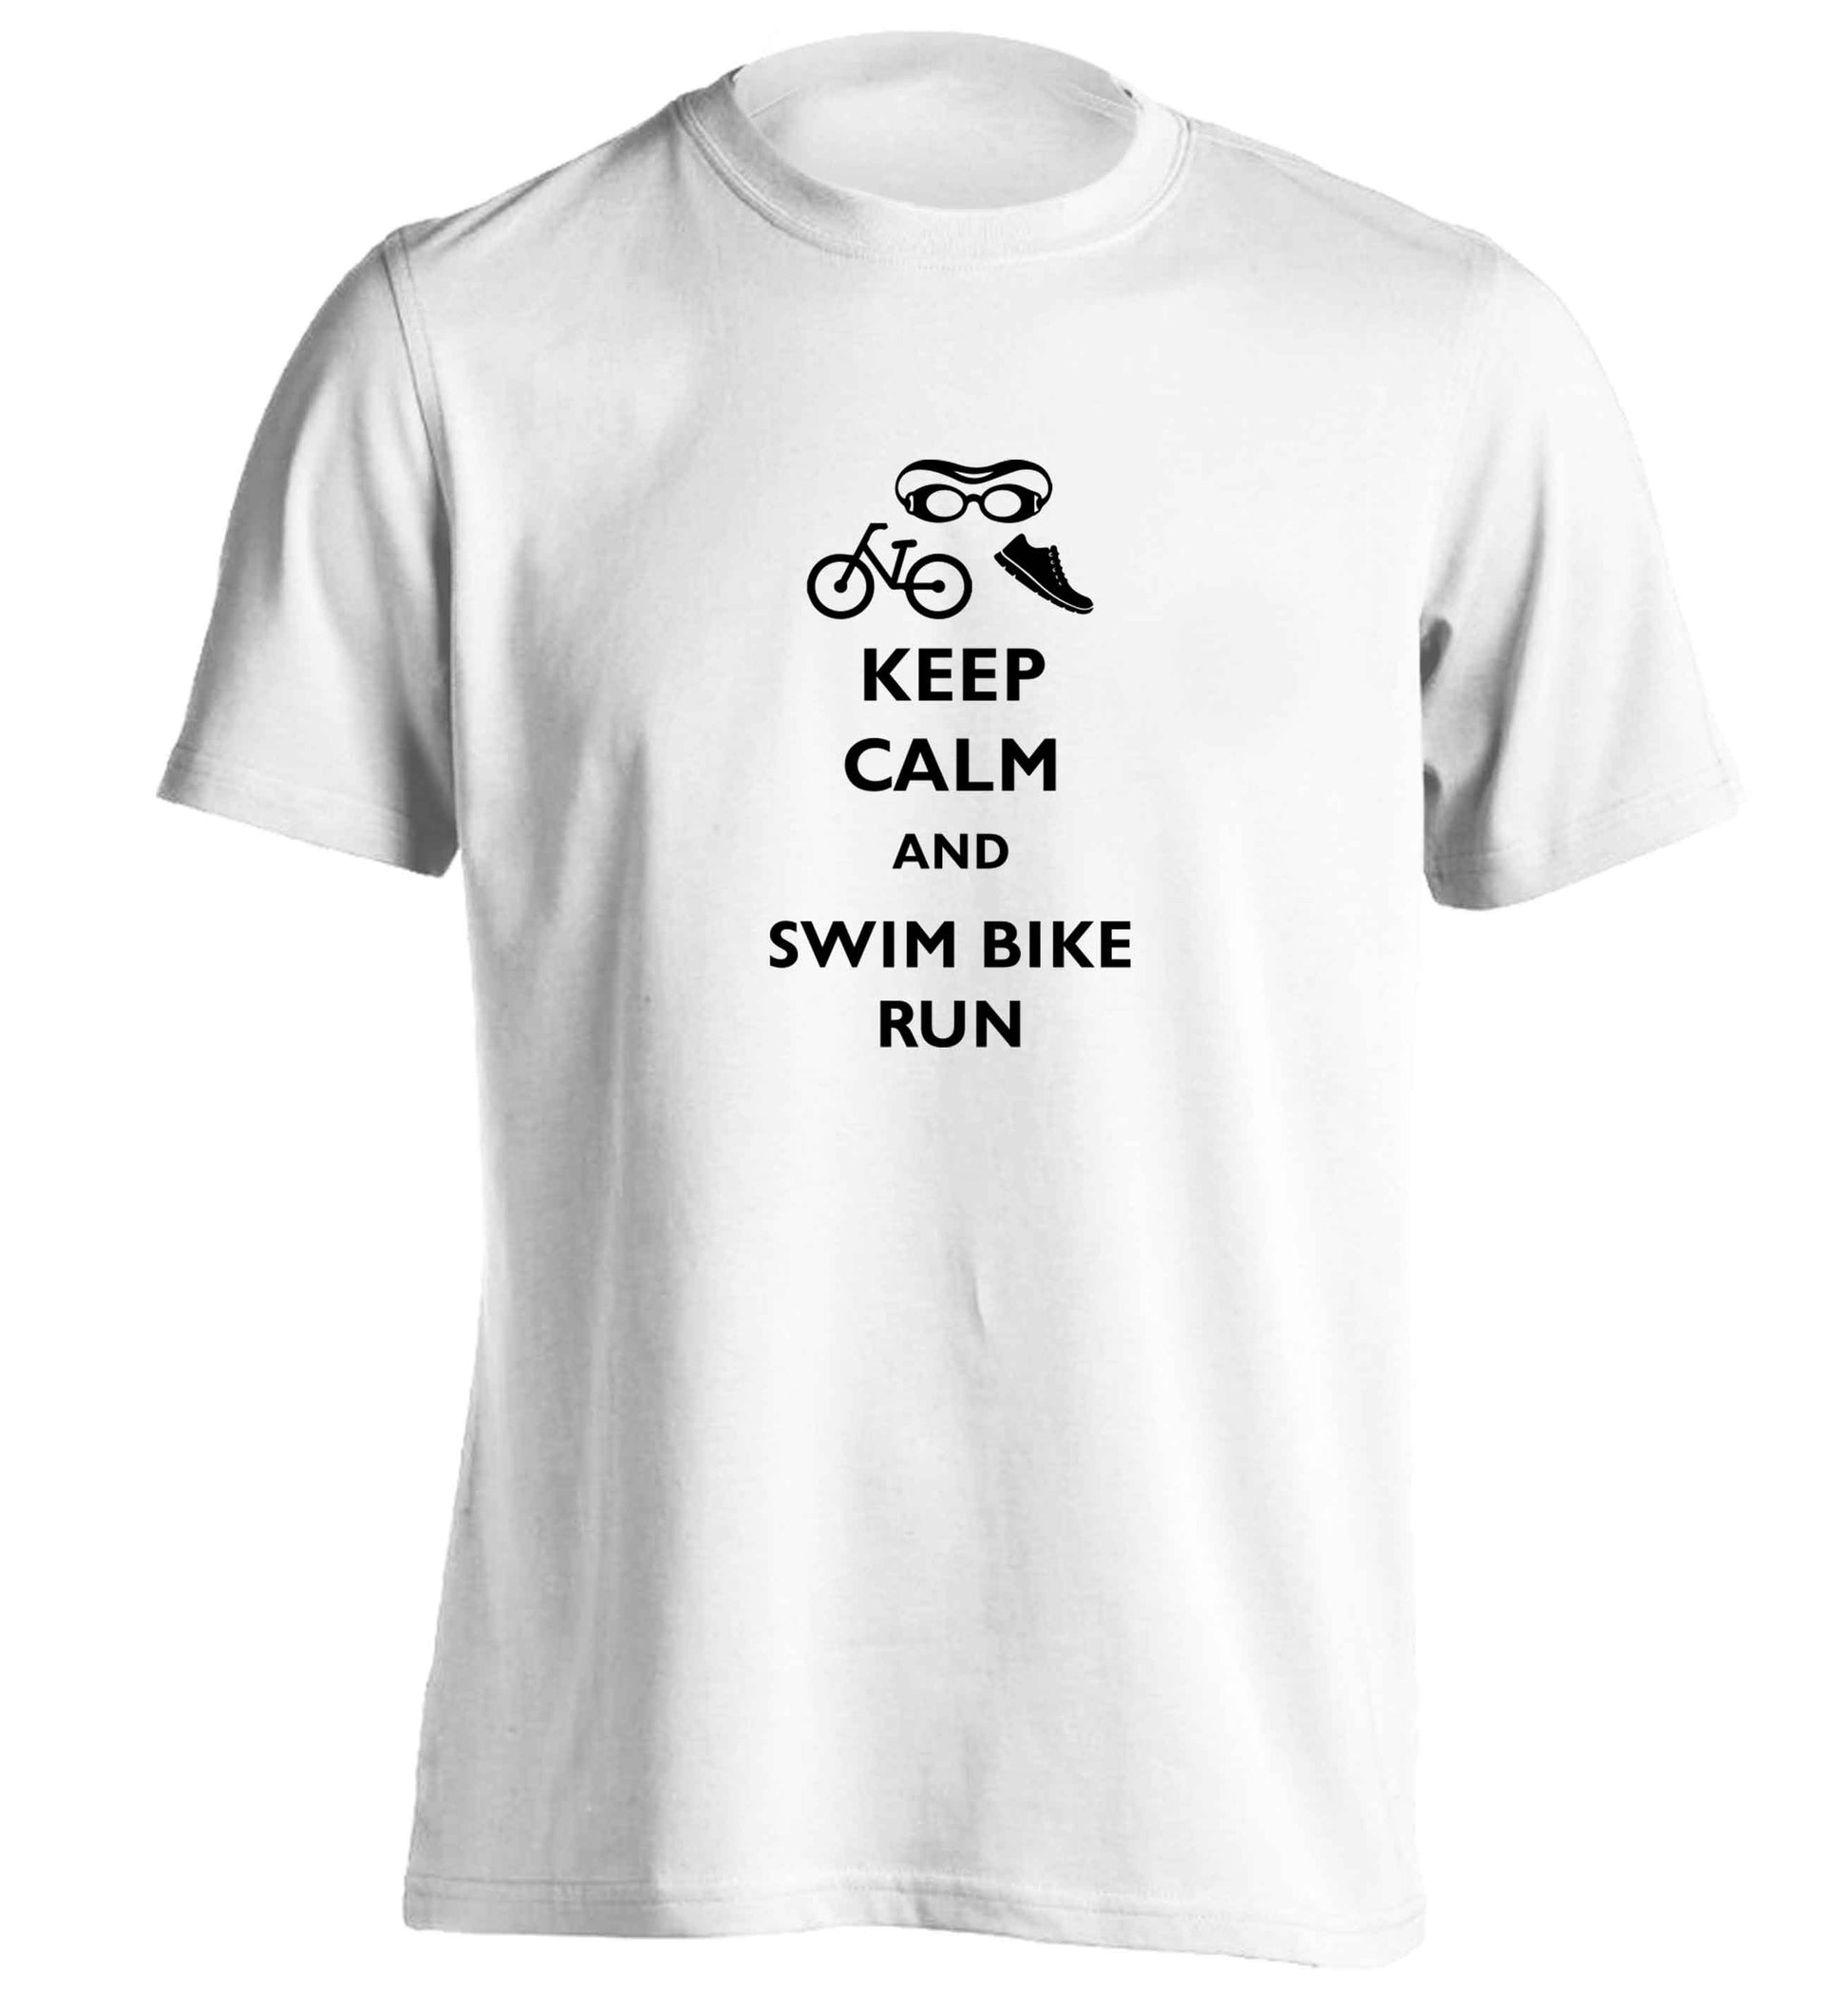 Keep calm and swim bike run adults unisex white Tshirt 2XL